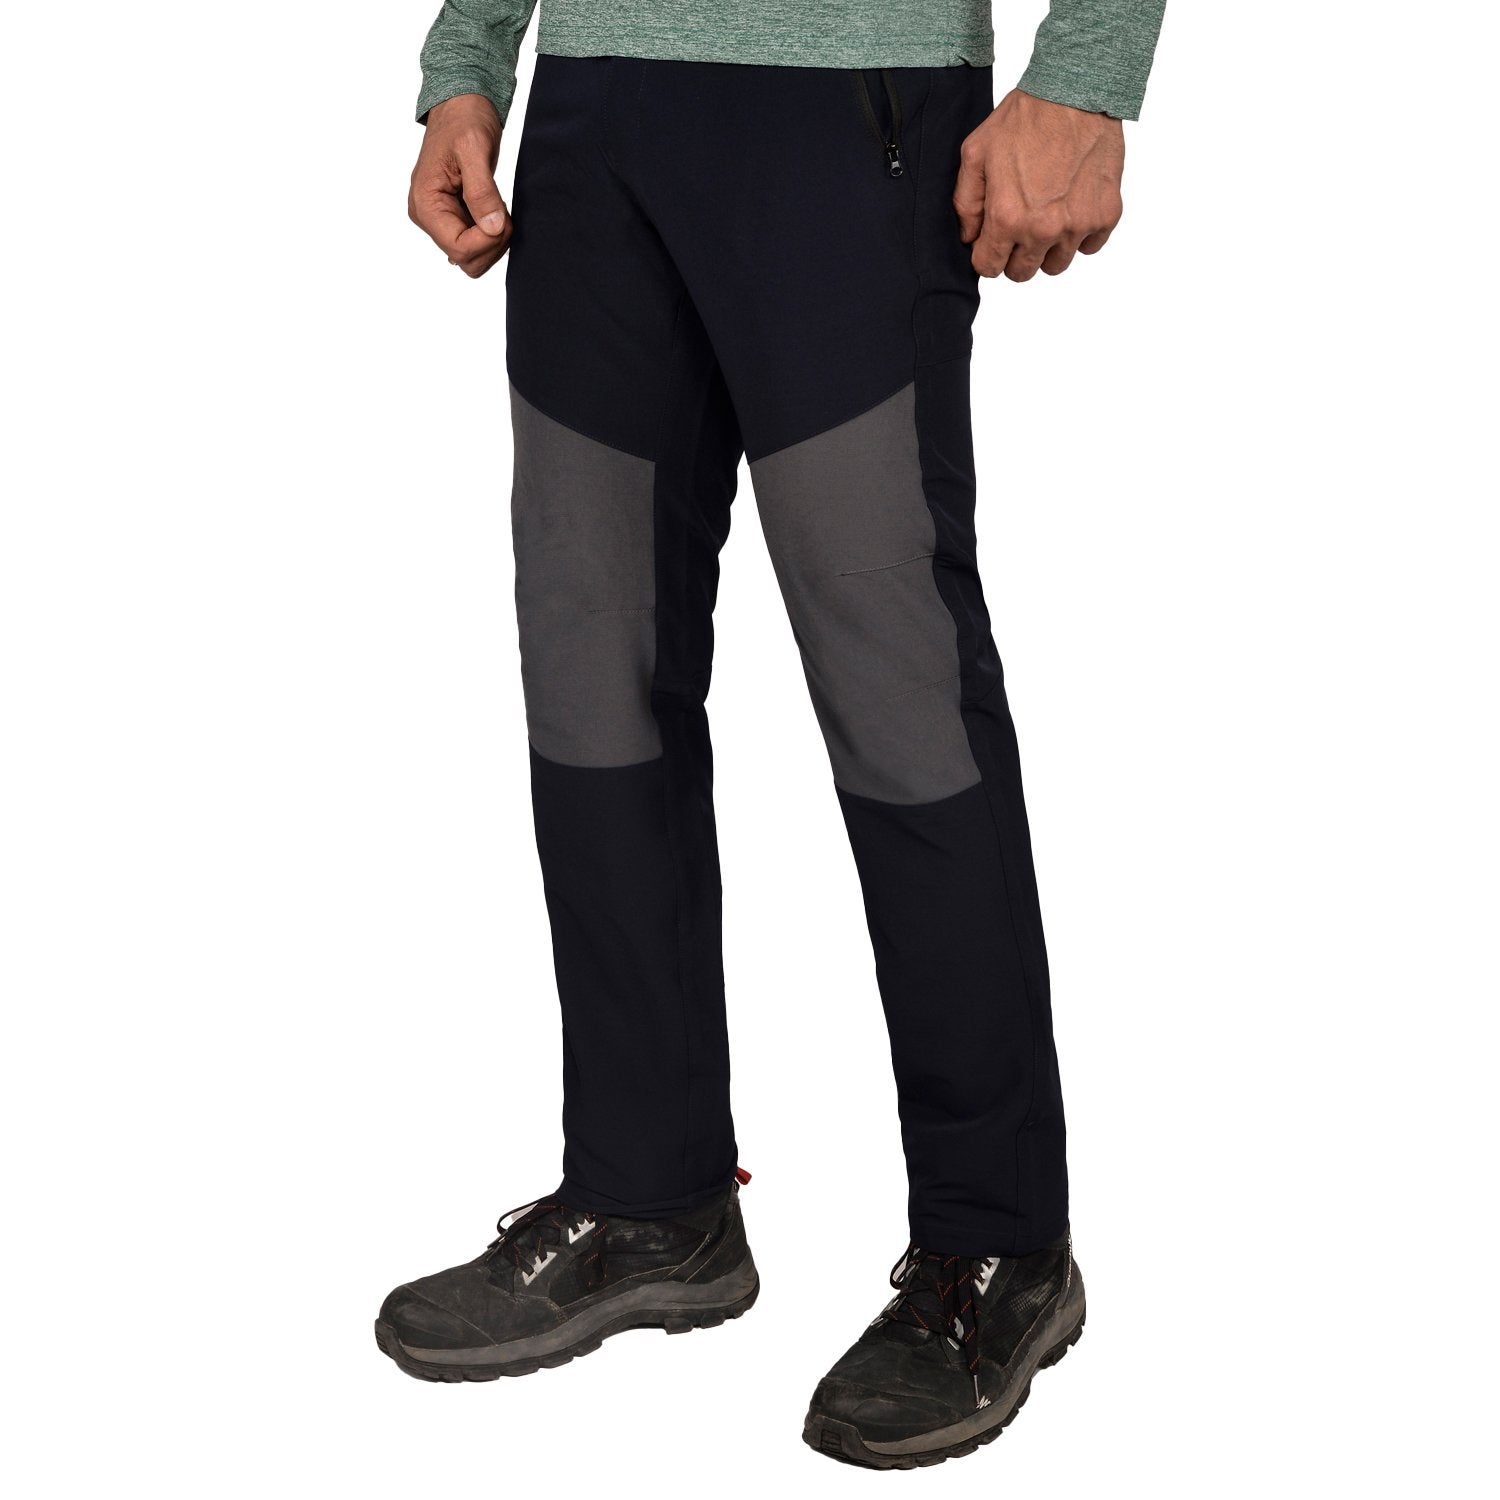 Buy Alpine All Weather Trekking Pants at Gokyo Outdoor Clothing & Gear